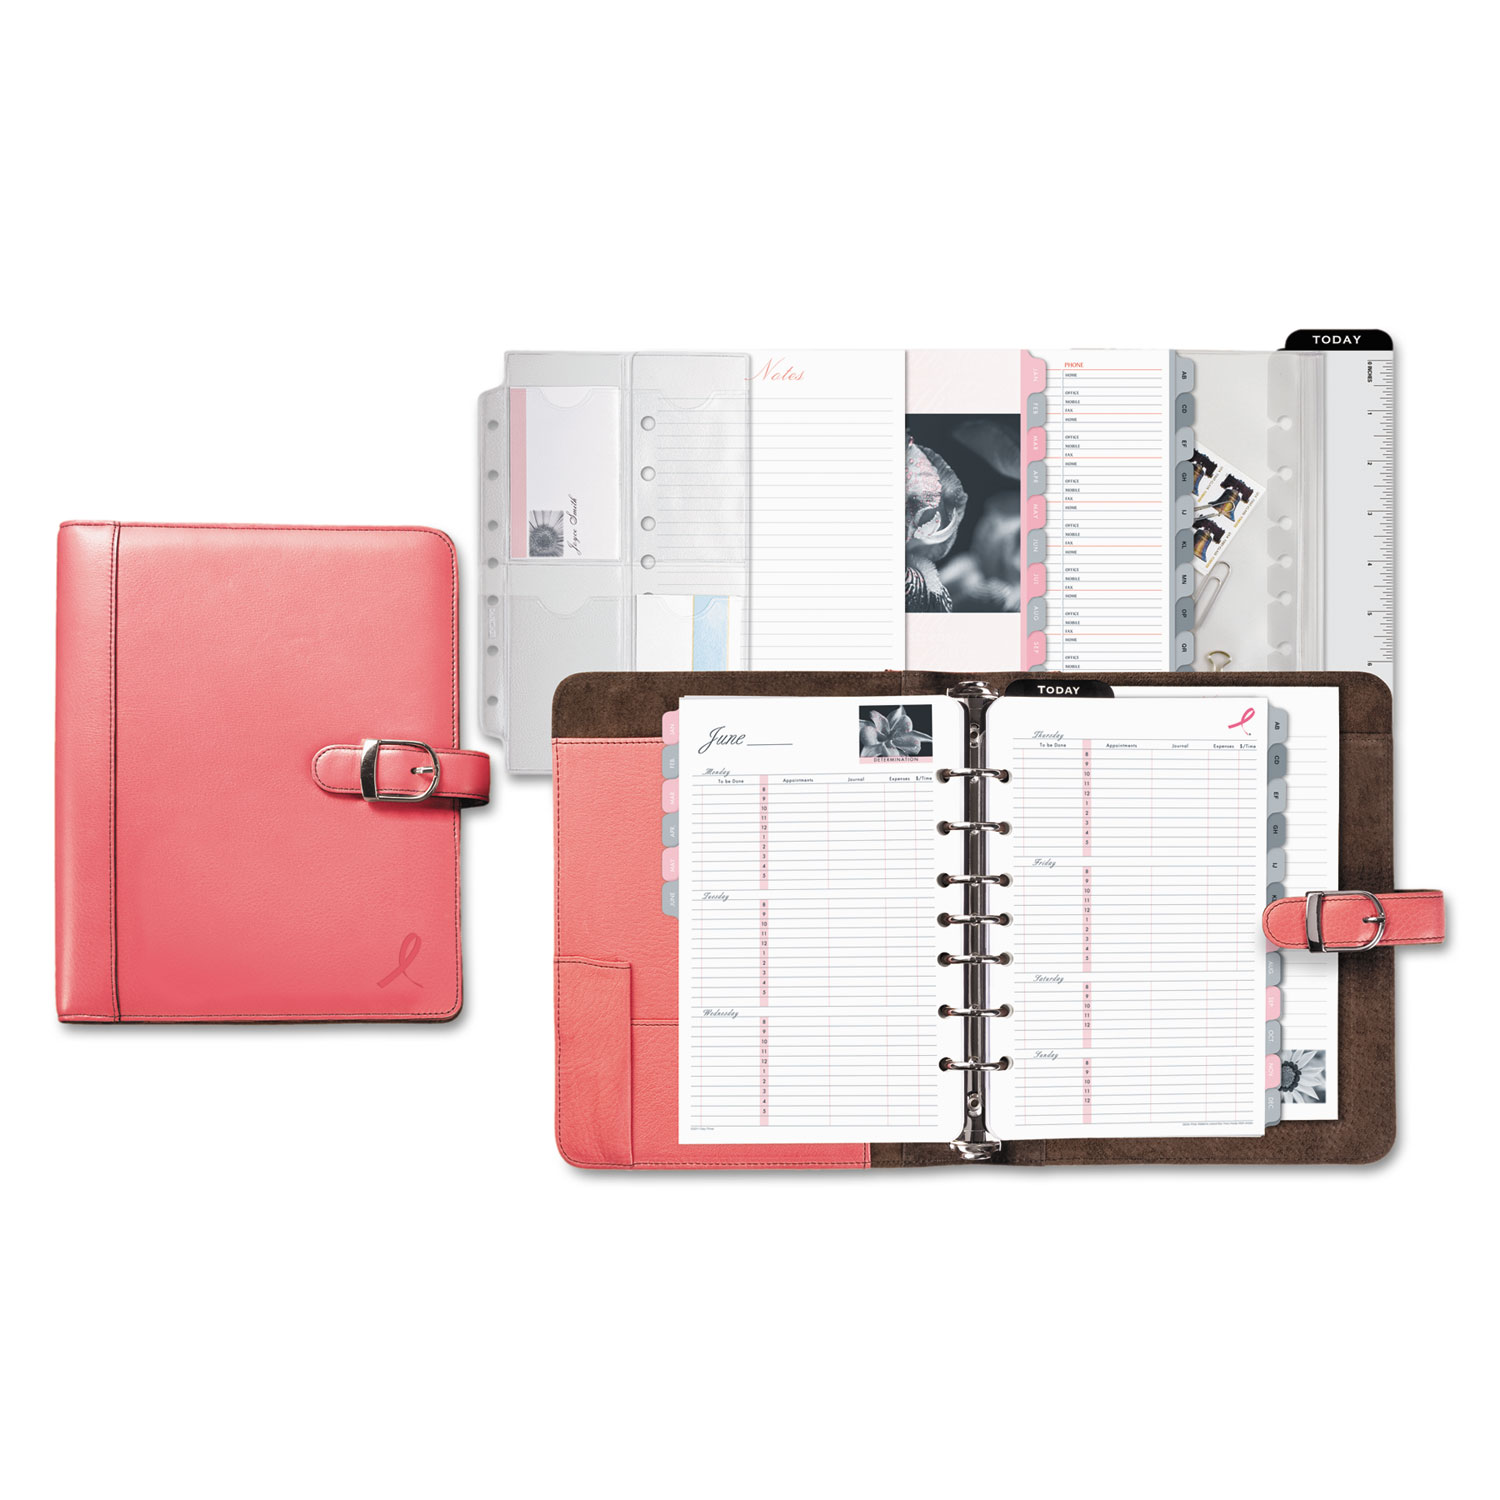  Day-Timer 48434 Pink Ribbon Loose-Leaf Organizer Set, 8 1/2 x 5 1/2, Pink Leather Cover (DTM48434) 